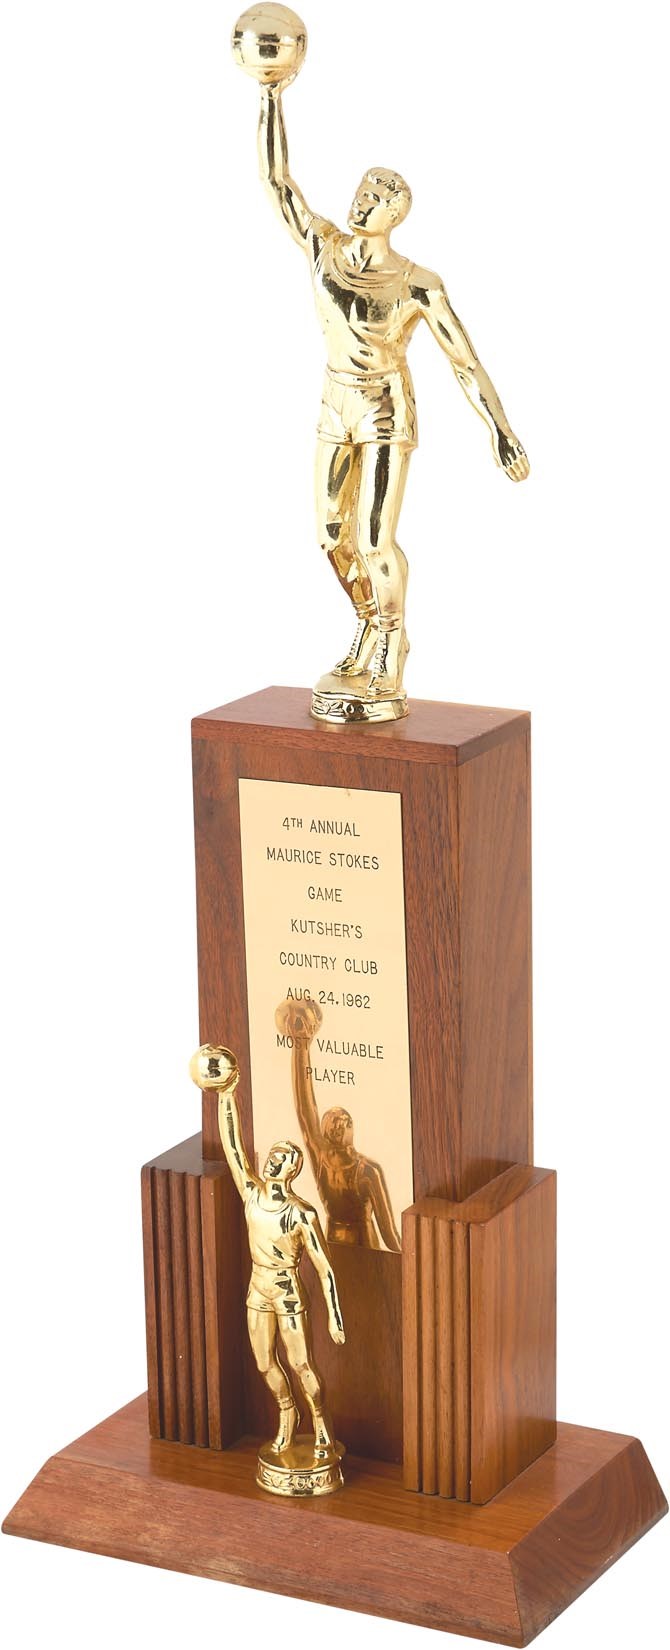 The Oscar Robertson Collection - 1962 Maurice Stokes Benefit Game MVP Trophy Presented to Oscar Robertson